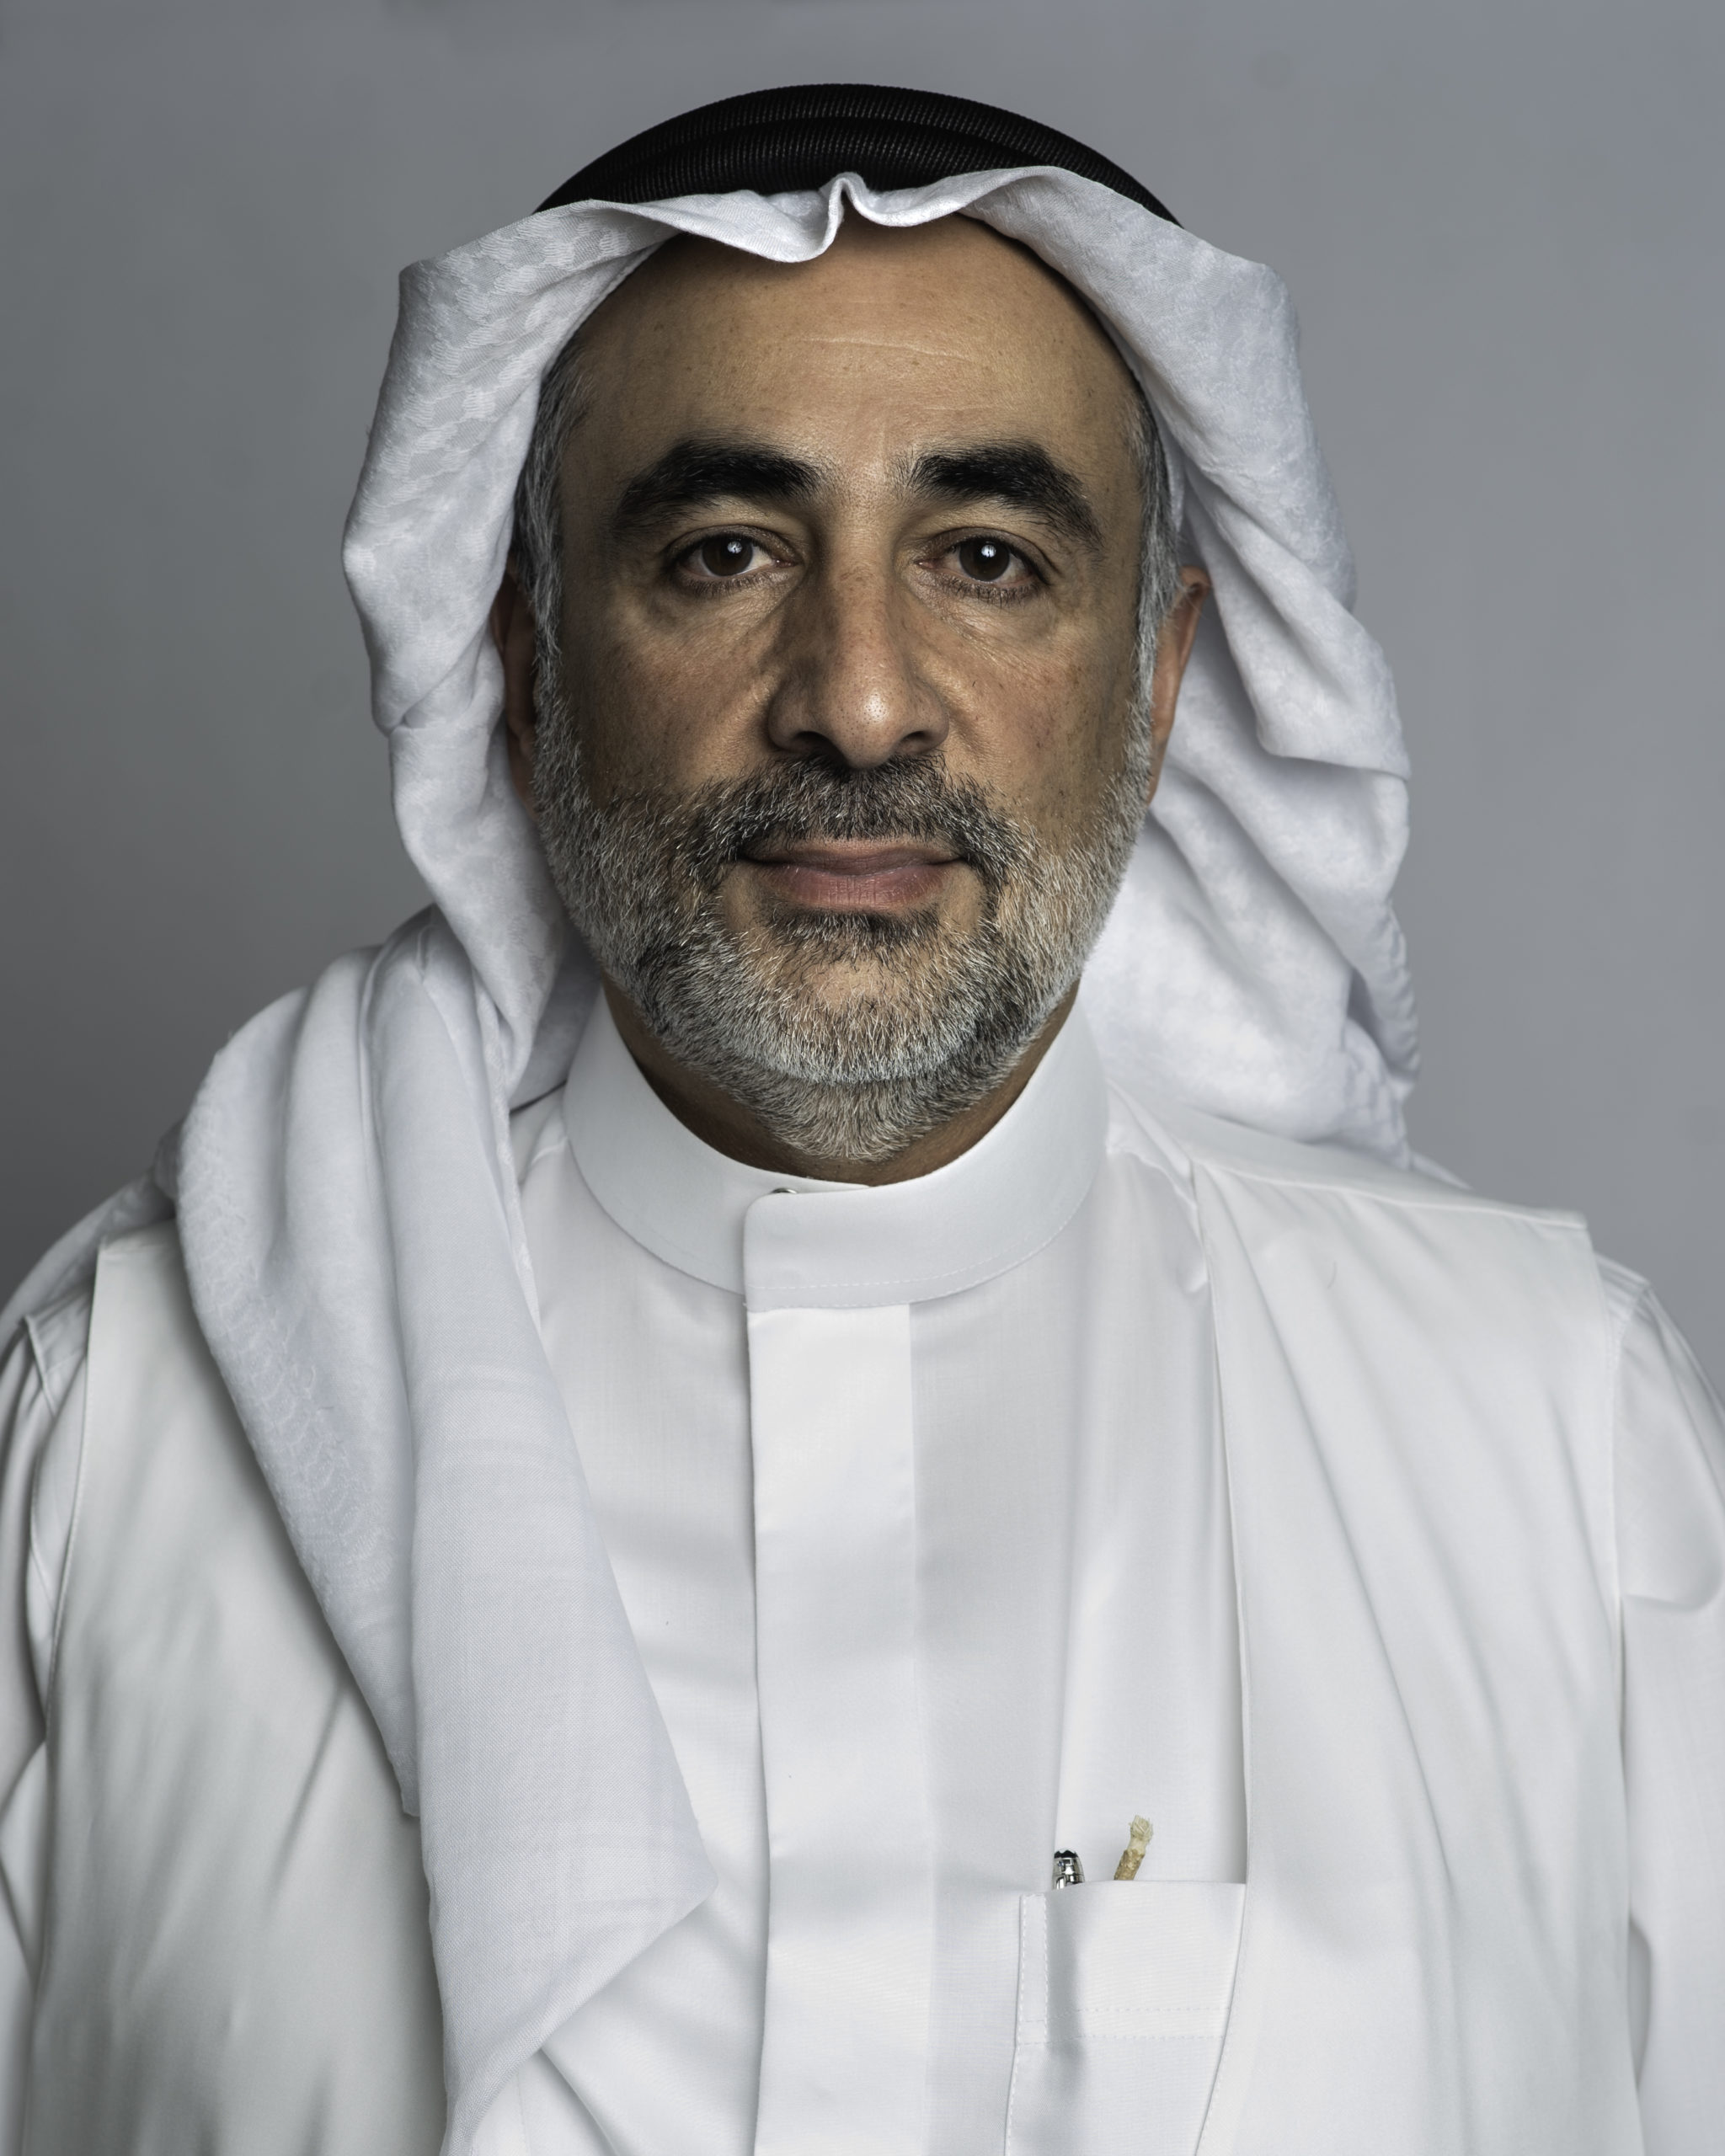 Mr. Saud Abulaziz Al Suliman